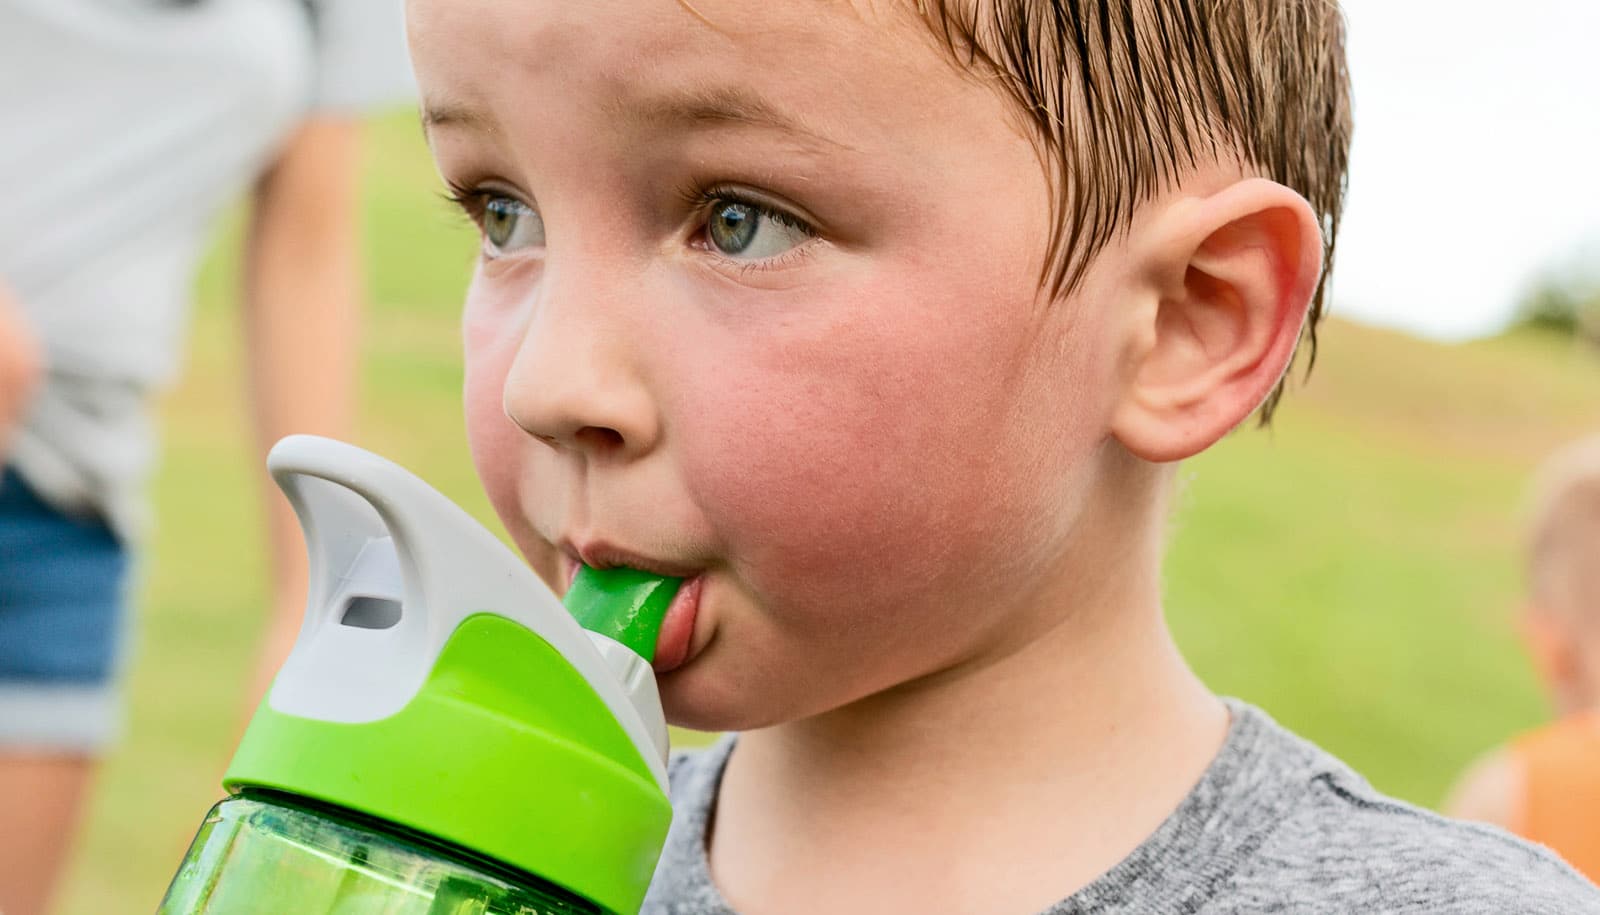 preschooler exercises outside, drinks water while sweaty